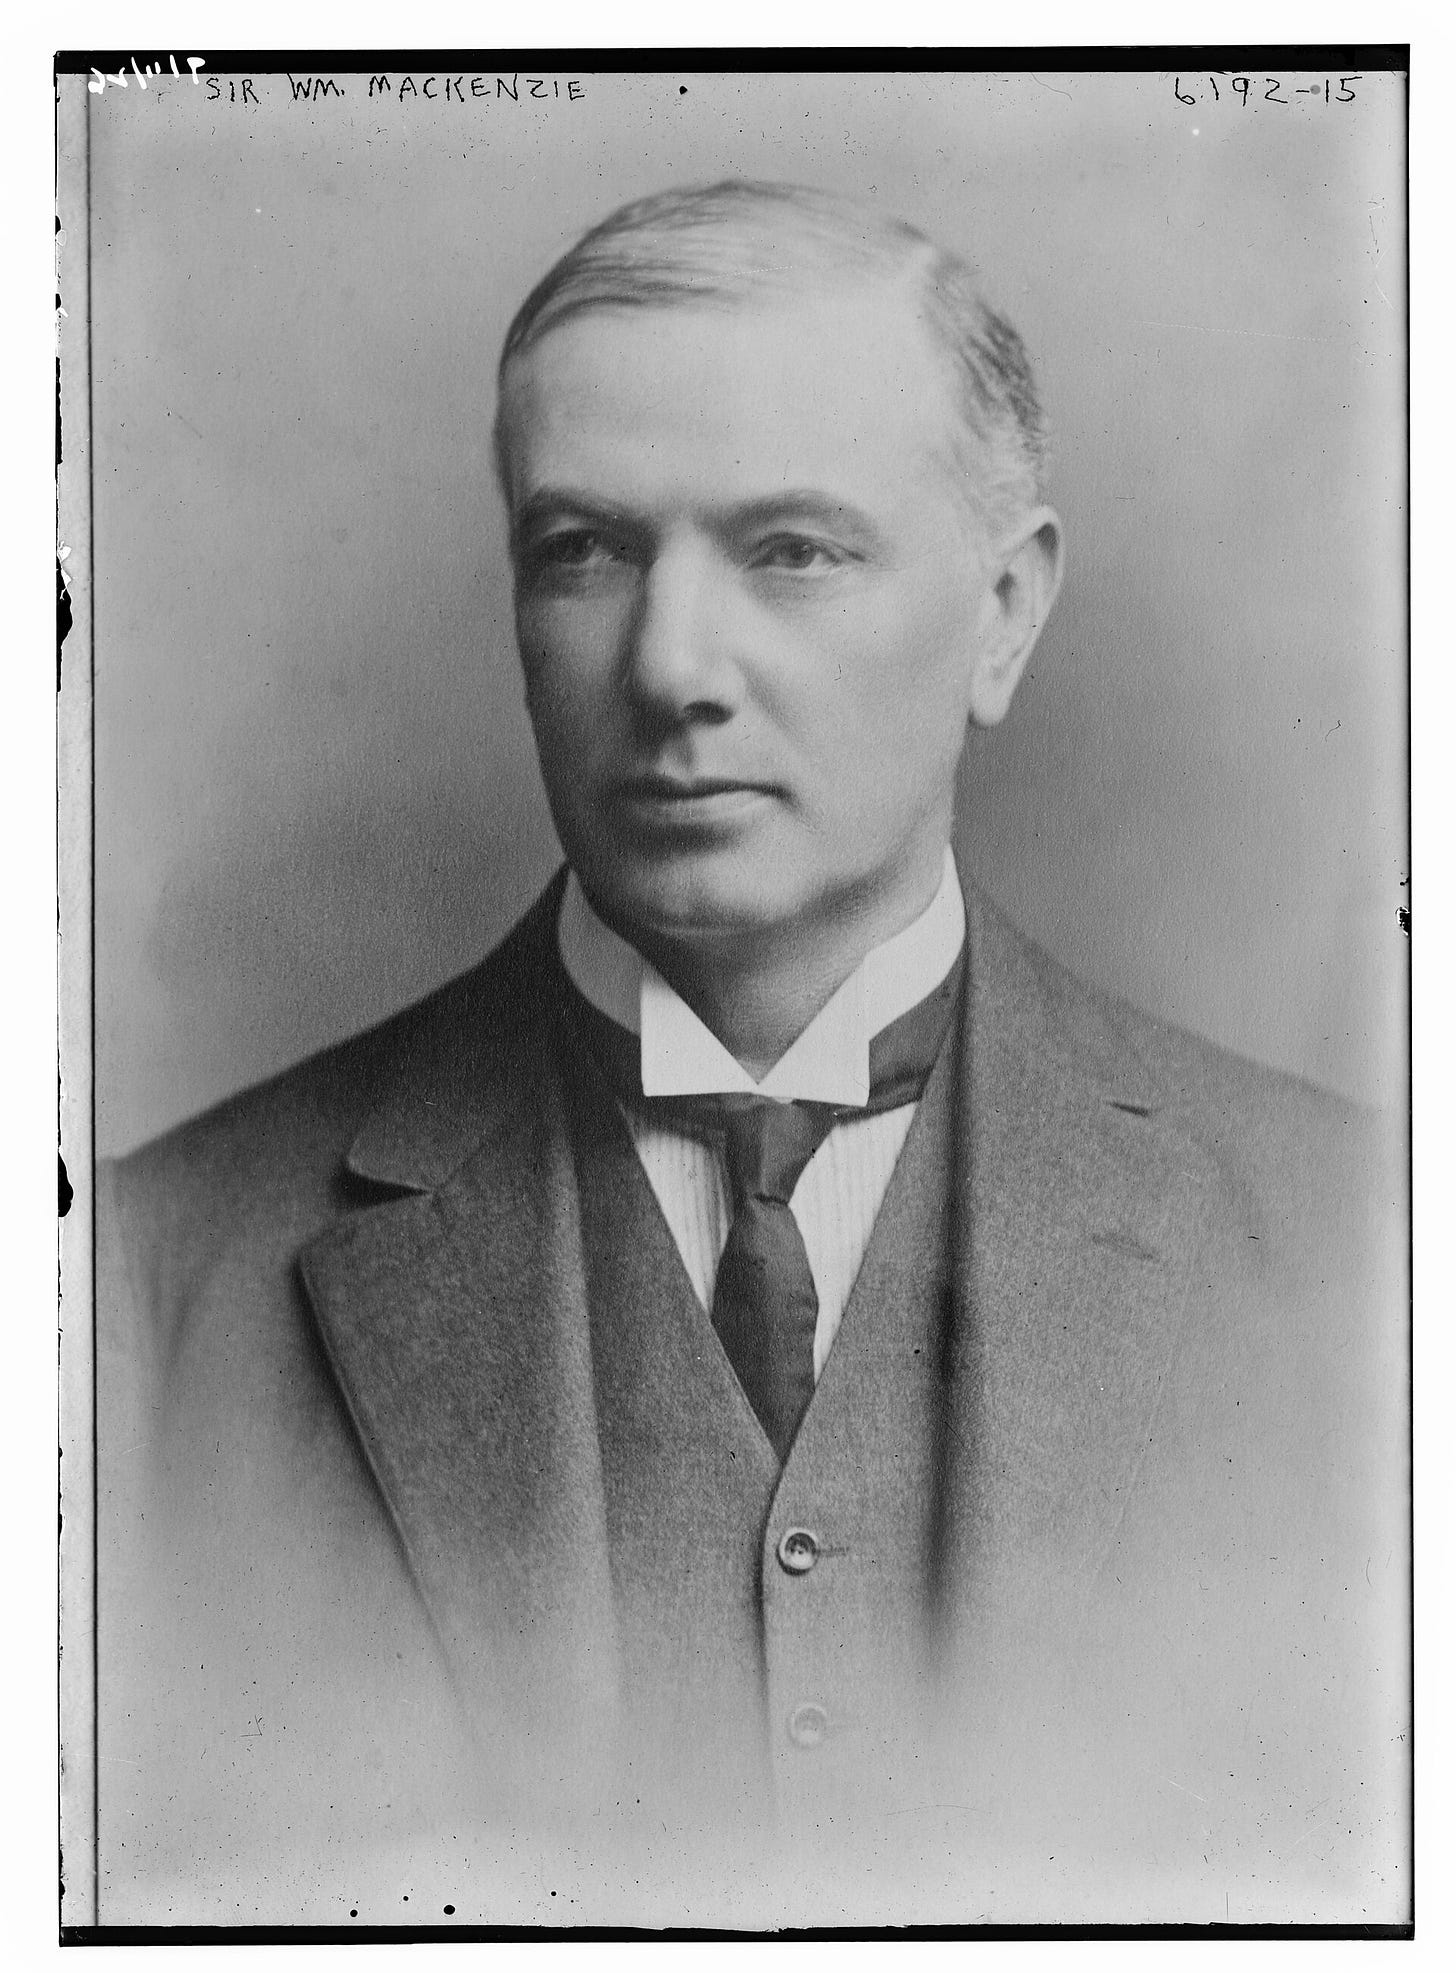 Sir William Mackenzie in 1924